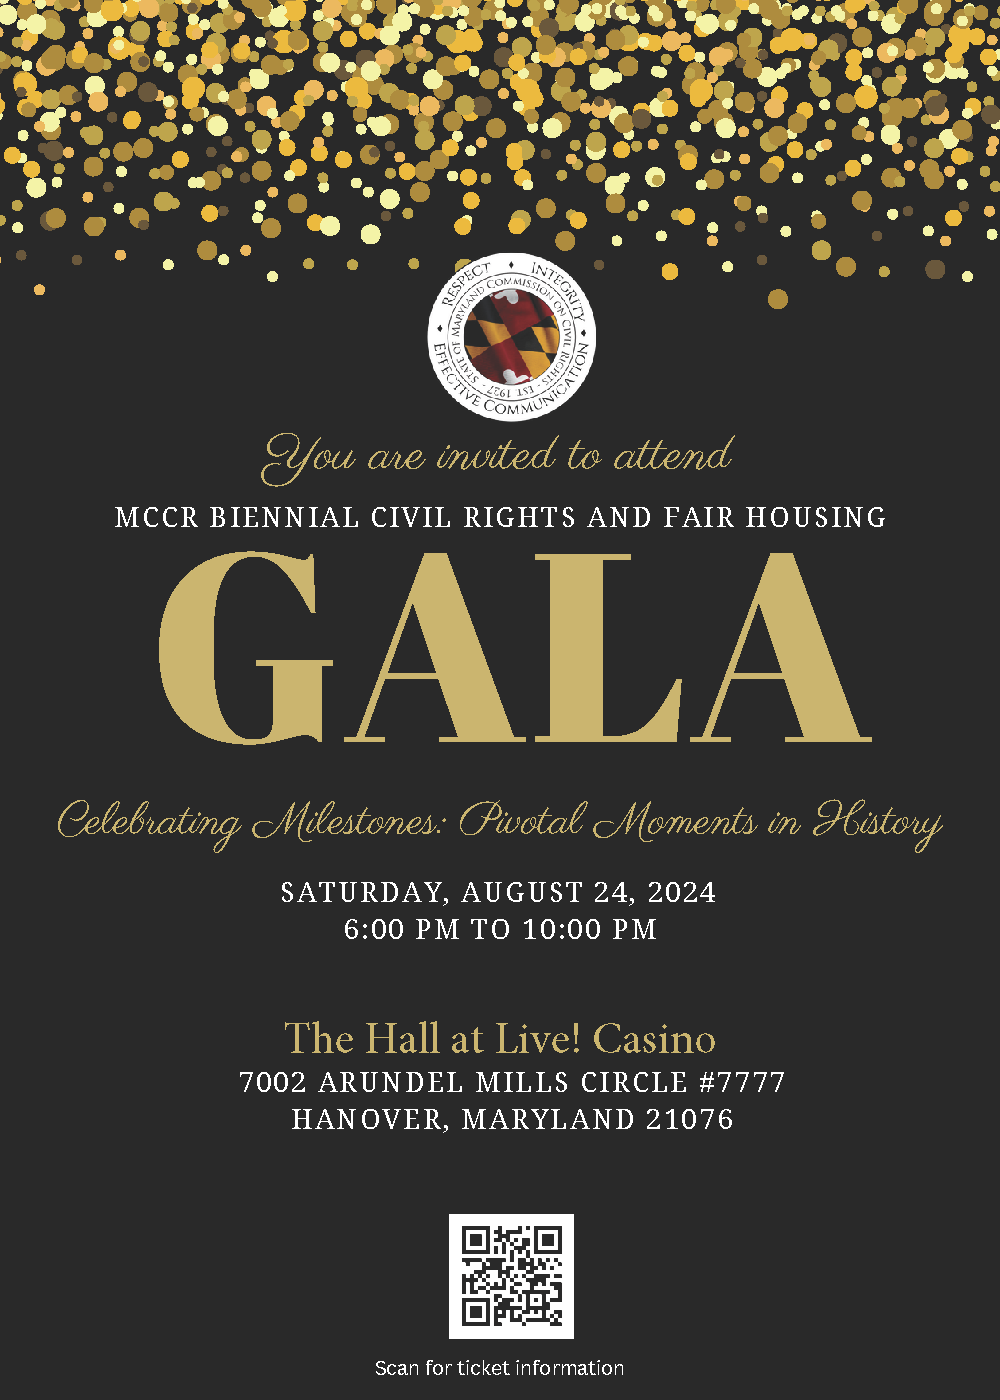 TICKETS ARE NOW AVAILIBLE!!!!!!  MCCR's Biennial Civil Rights & Fair Housing Gala Celebration - August 24, 2024